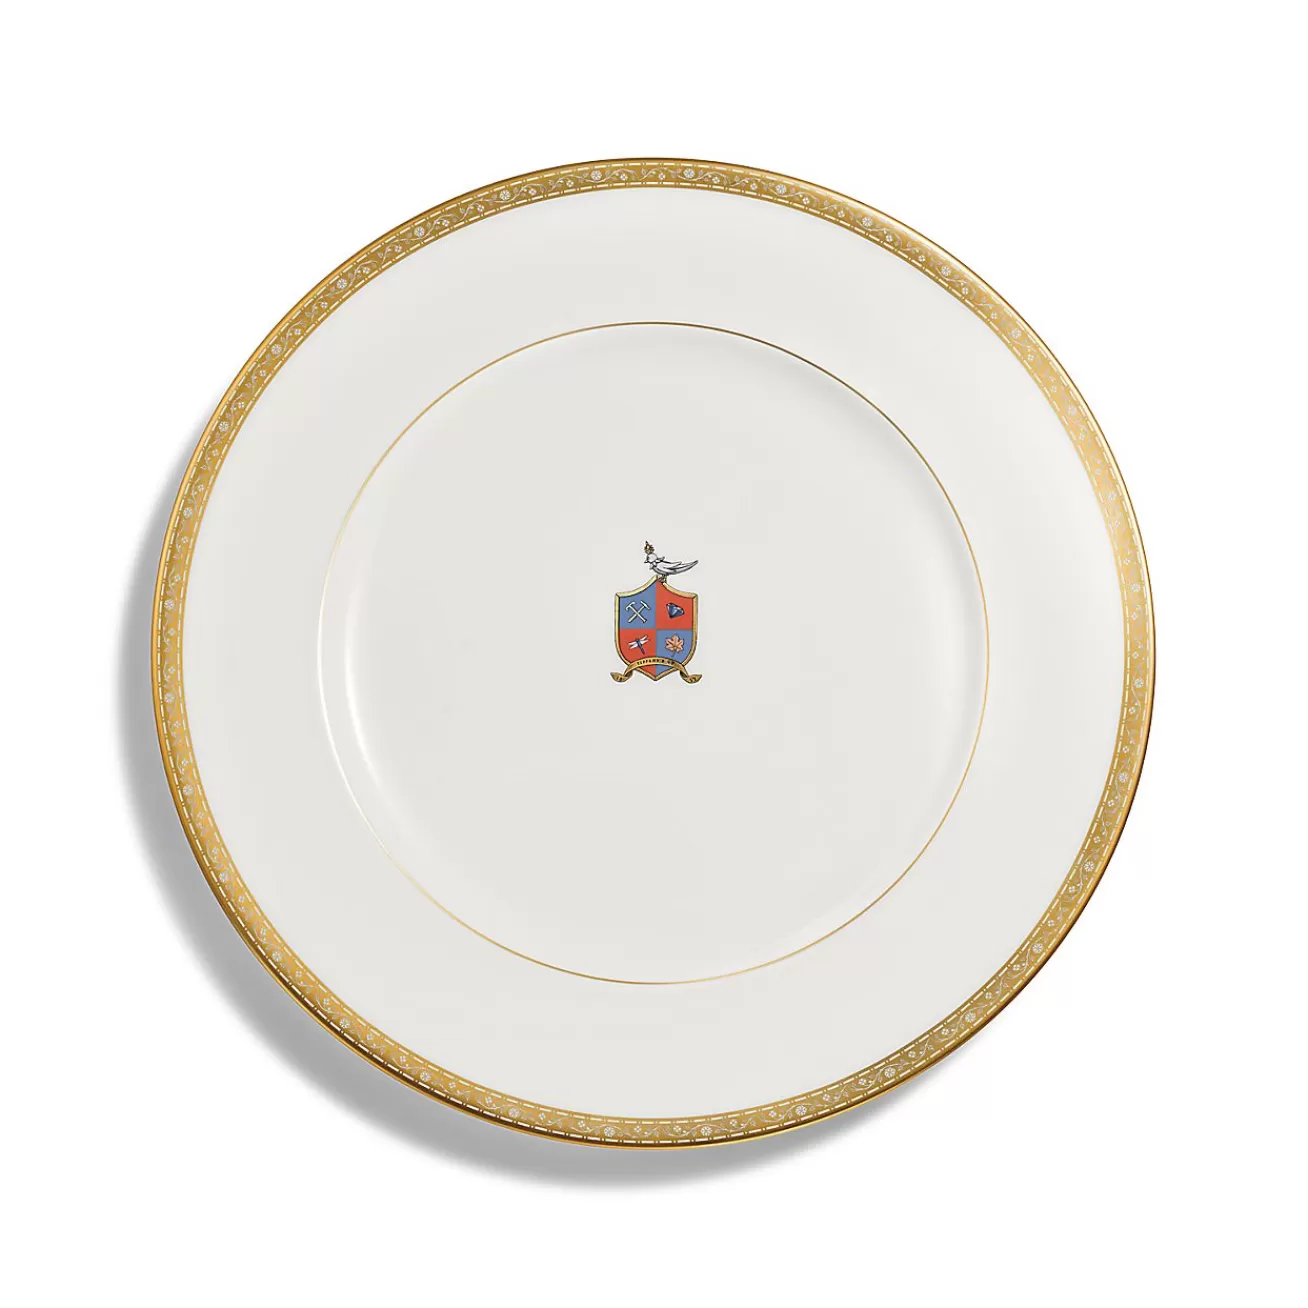 Tiffany & Co. Tiffany Crest Dinner Plate in Bone China | ^ Tableware